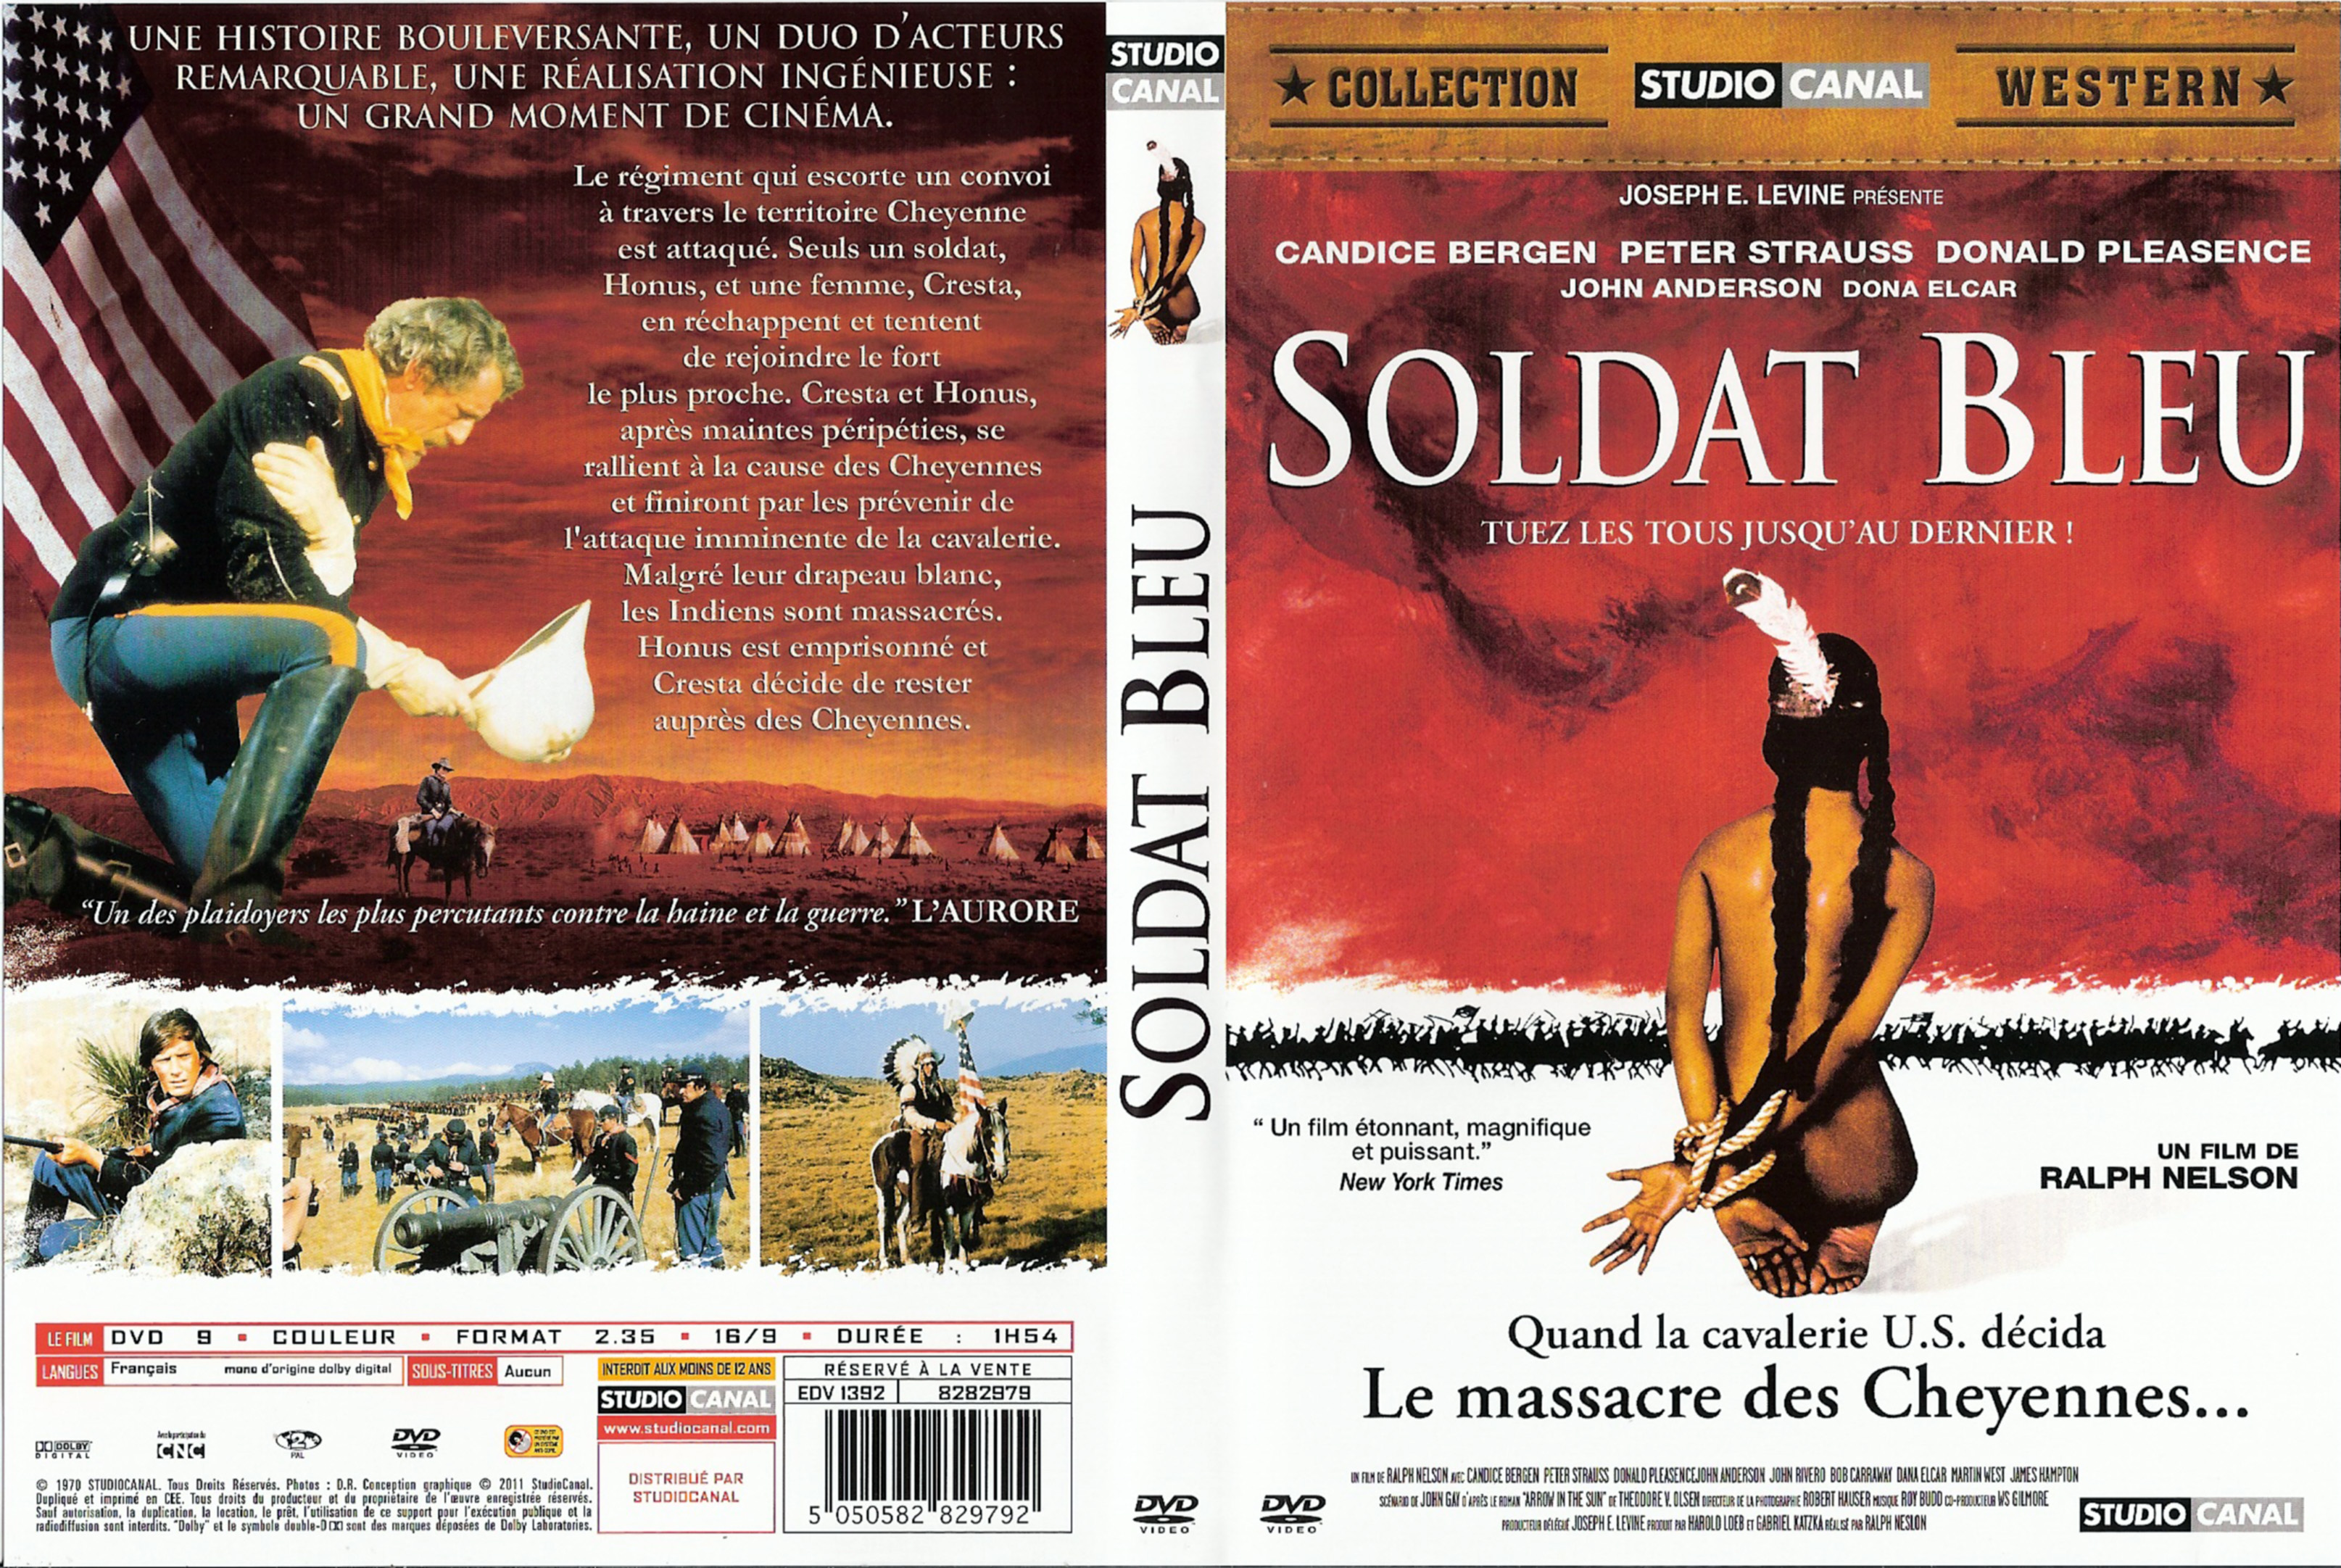 Jaquette DVD Soldat bleu